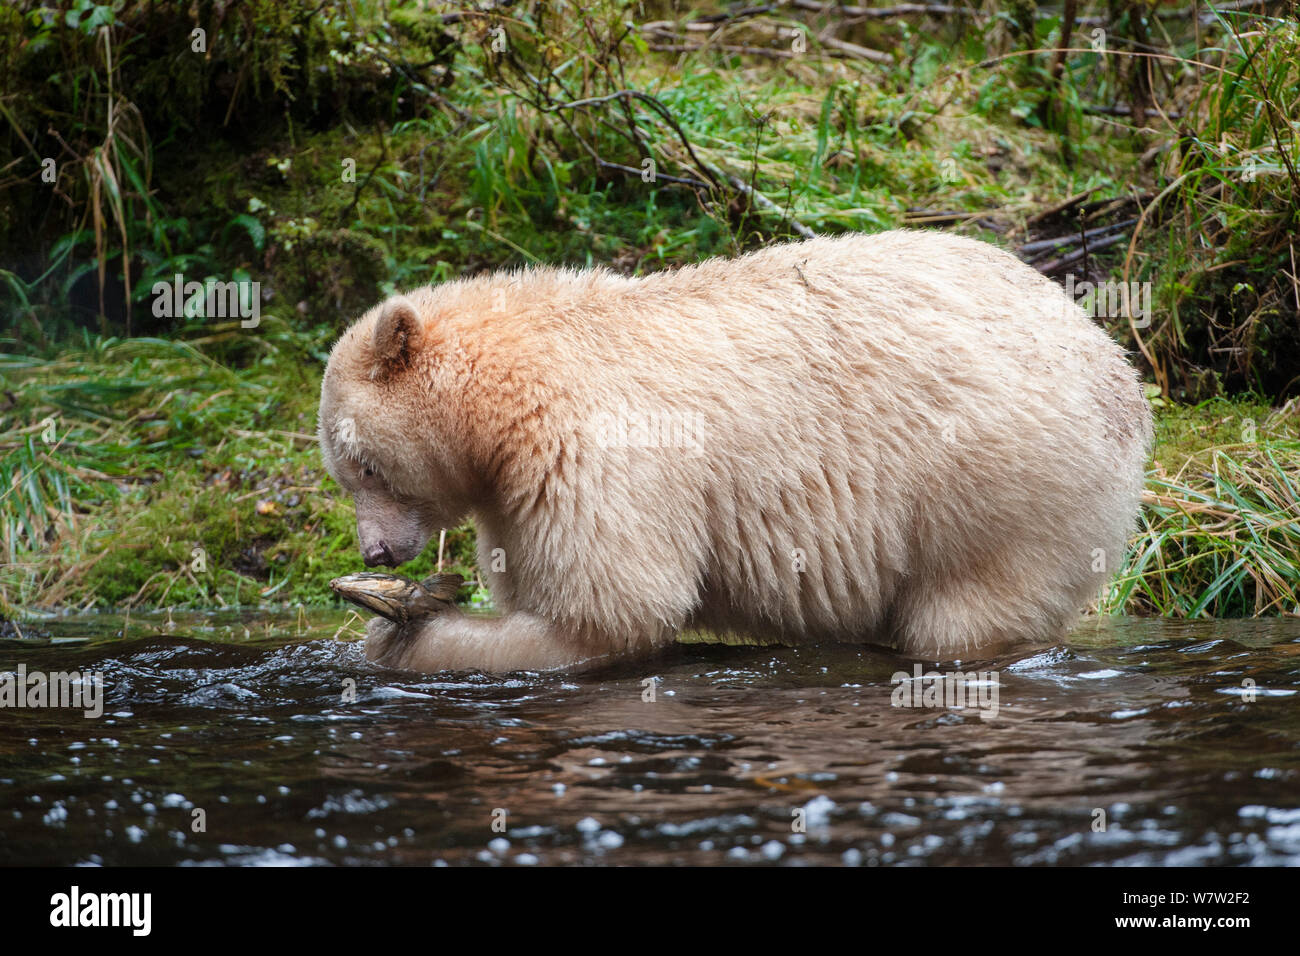 Espíritu de adultos / Oso Kermode (Ursus americanus kermodei) - White Morph del oso negro- por stream la pesca del salmón. Isla Gribbell, Great Bear Rainforest, British Columbia, Canadá, en octubre. Foto de stock